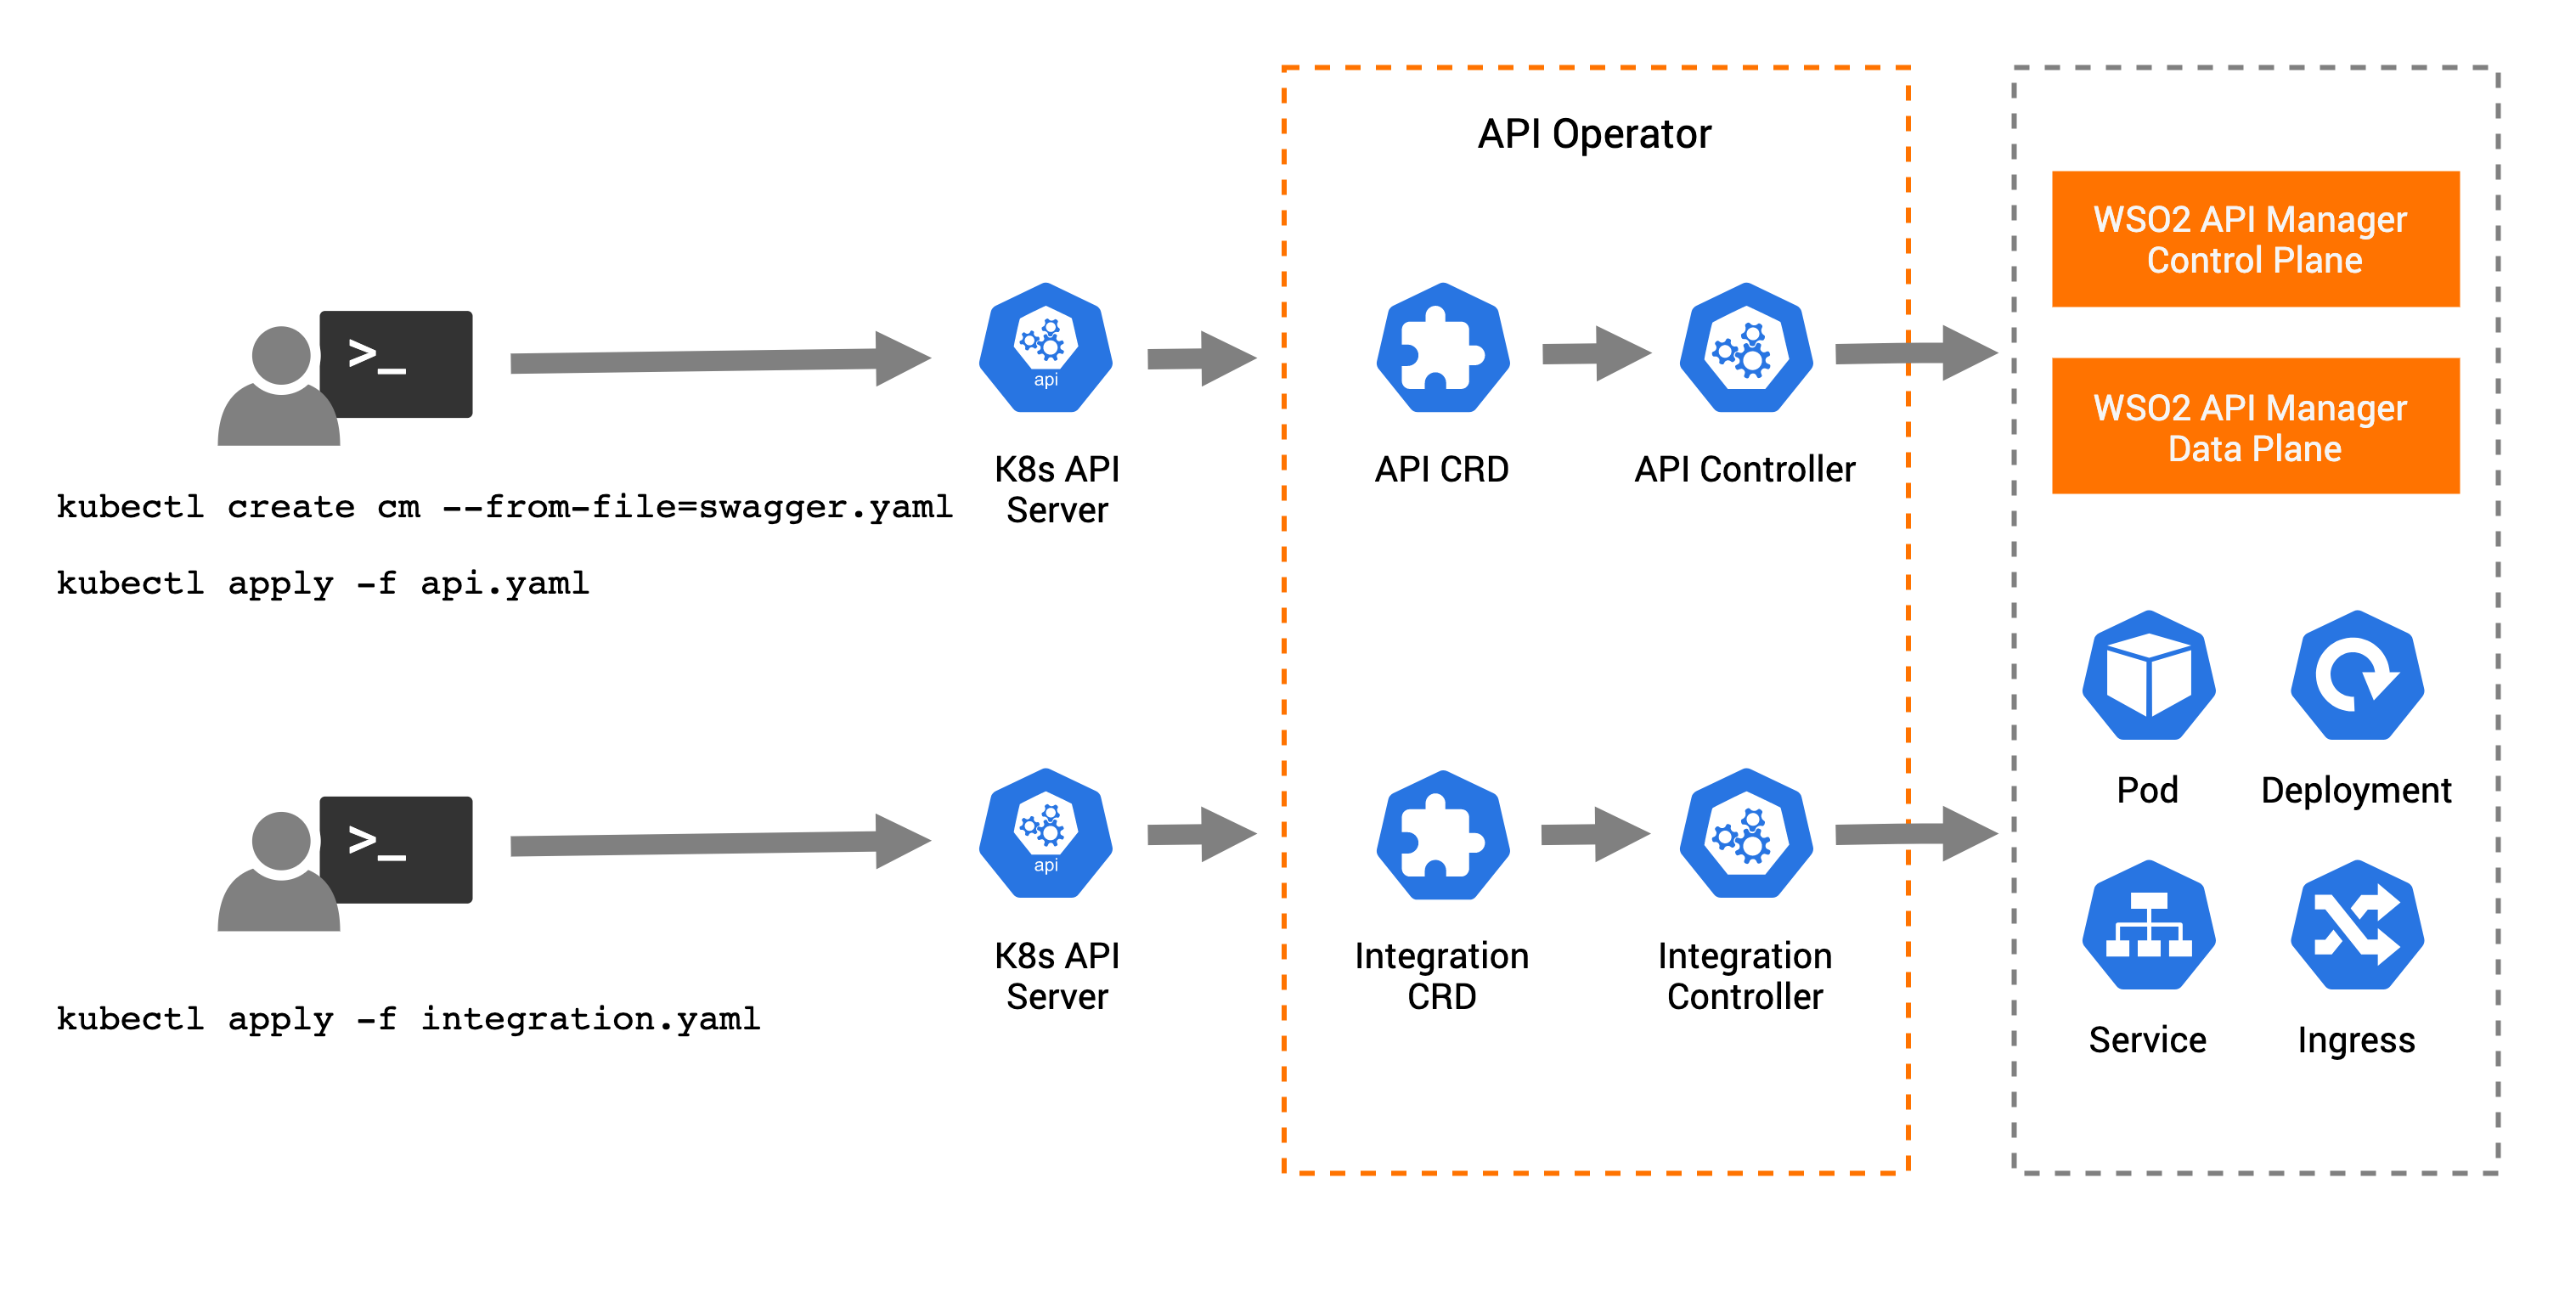 How API Operator Works